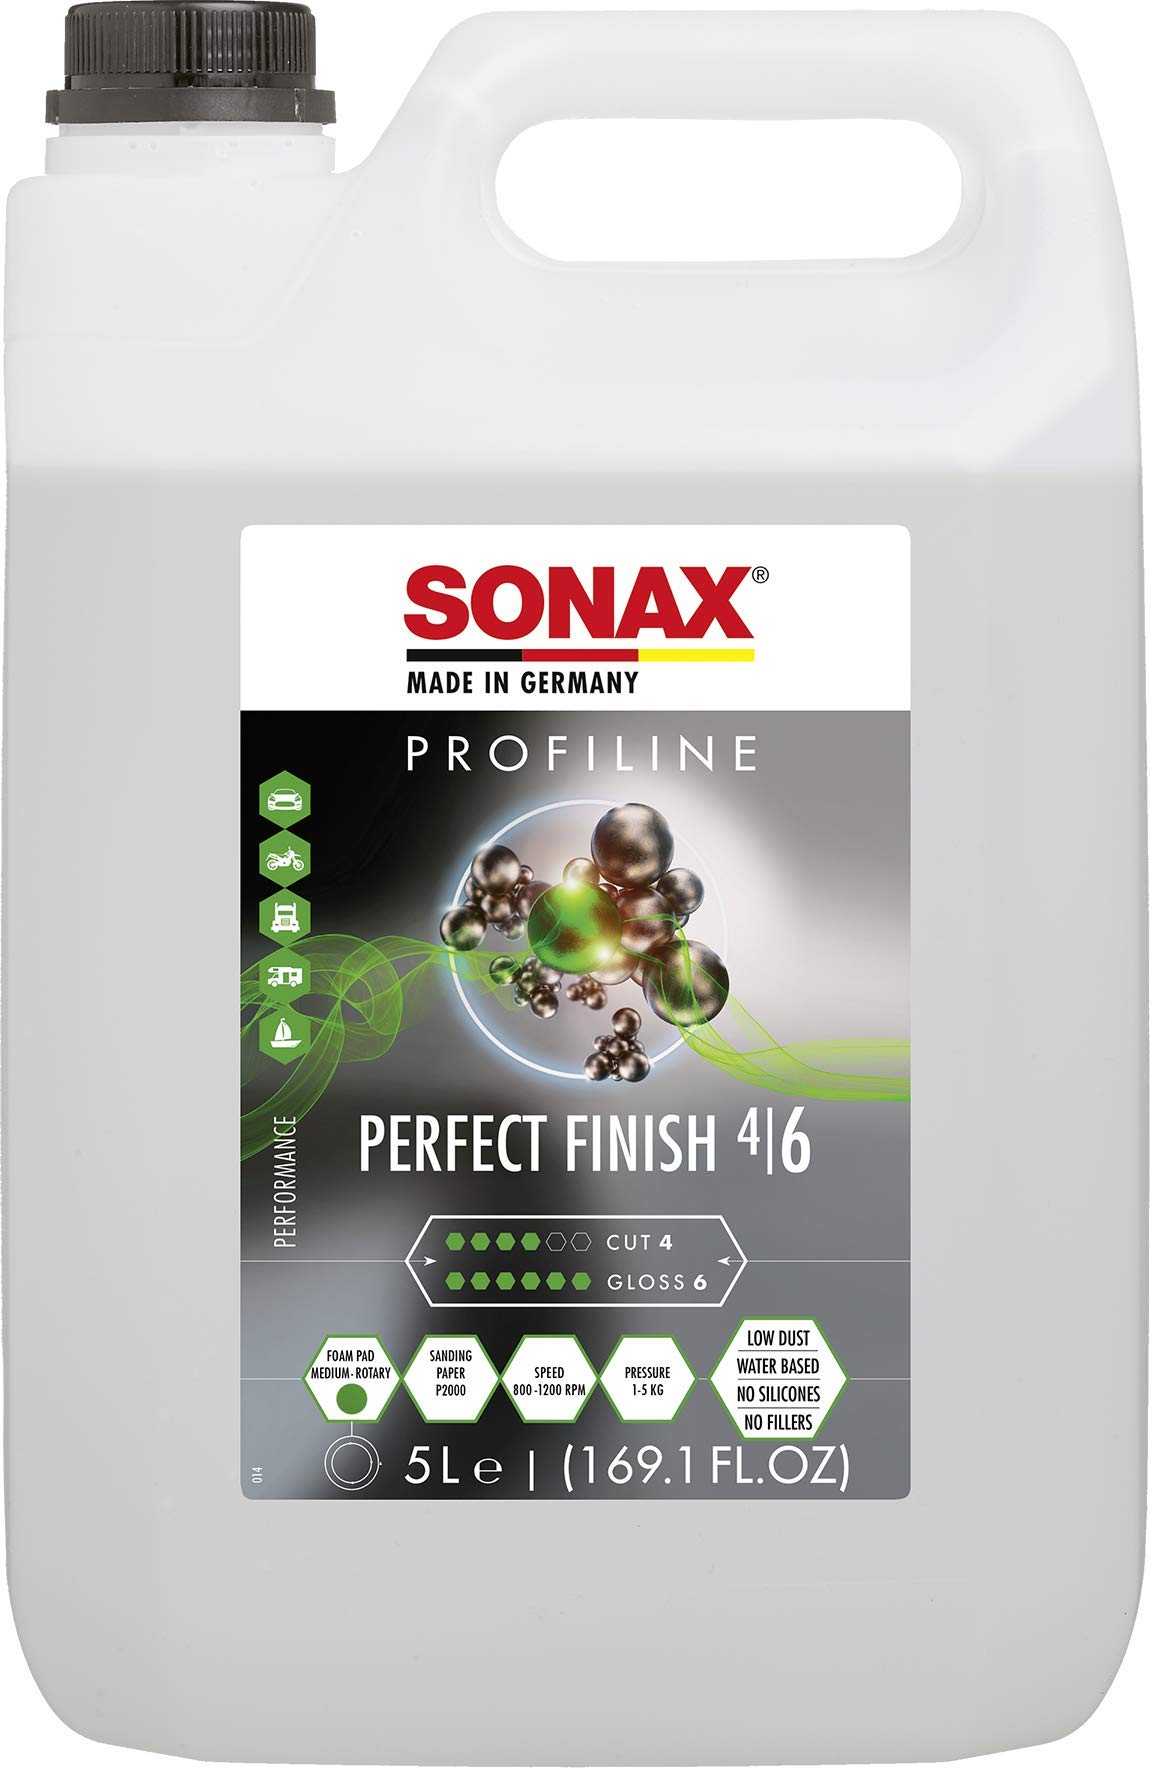 Sonax 224500 Profiline Perfect Finish, 169.1 fl. oz.